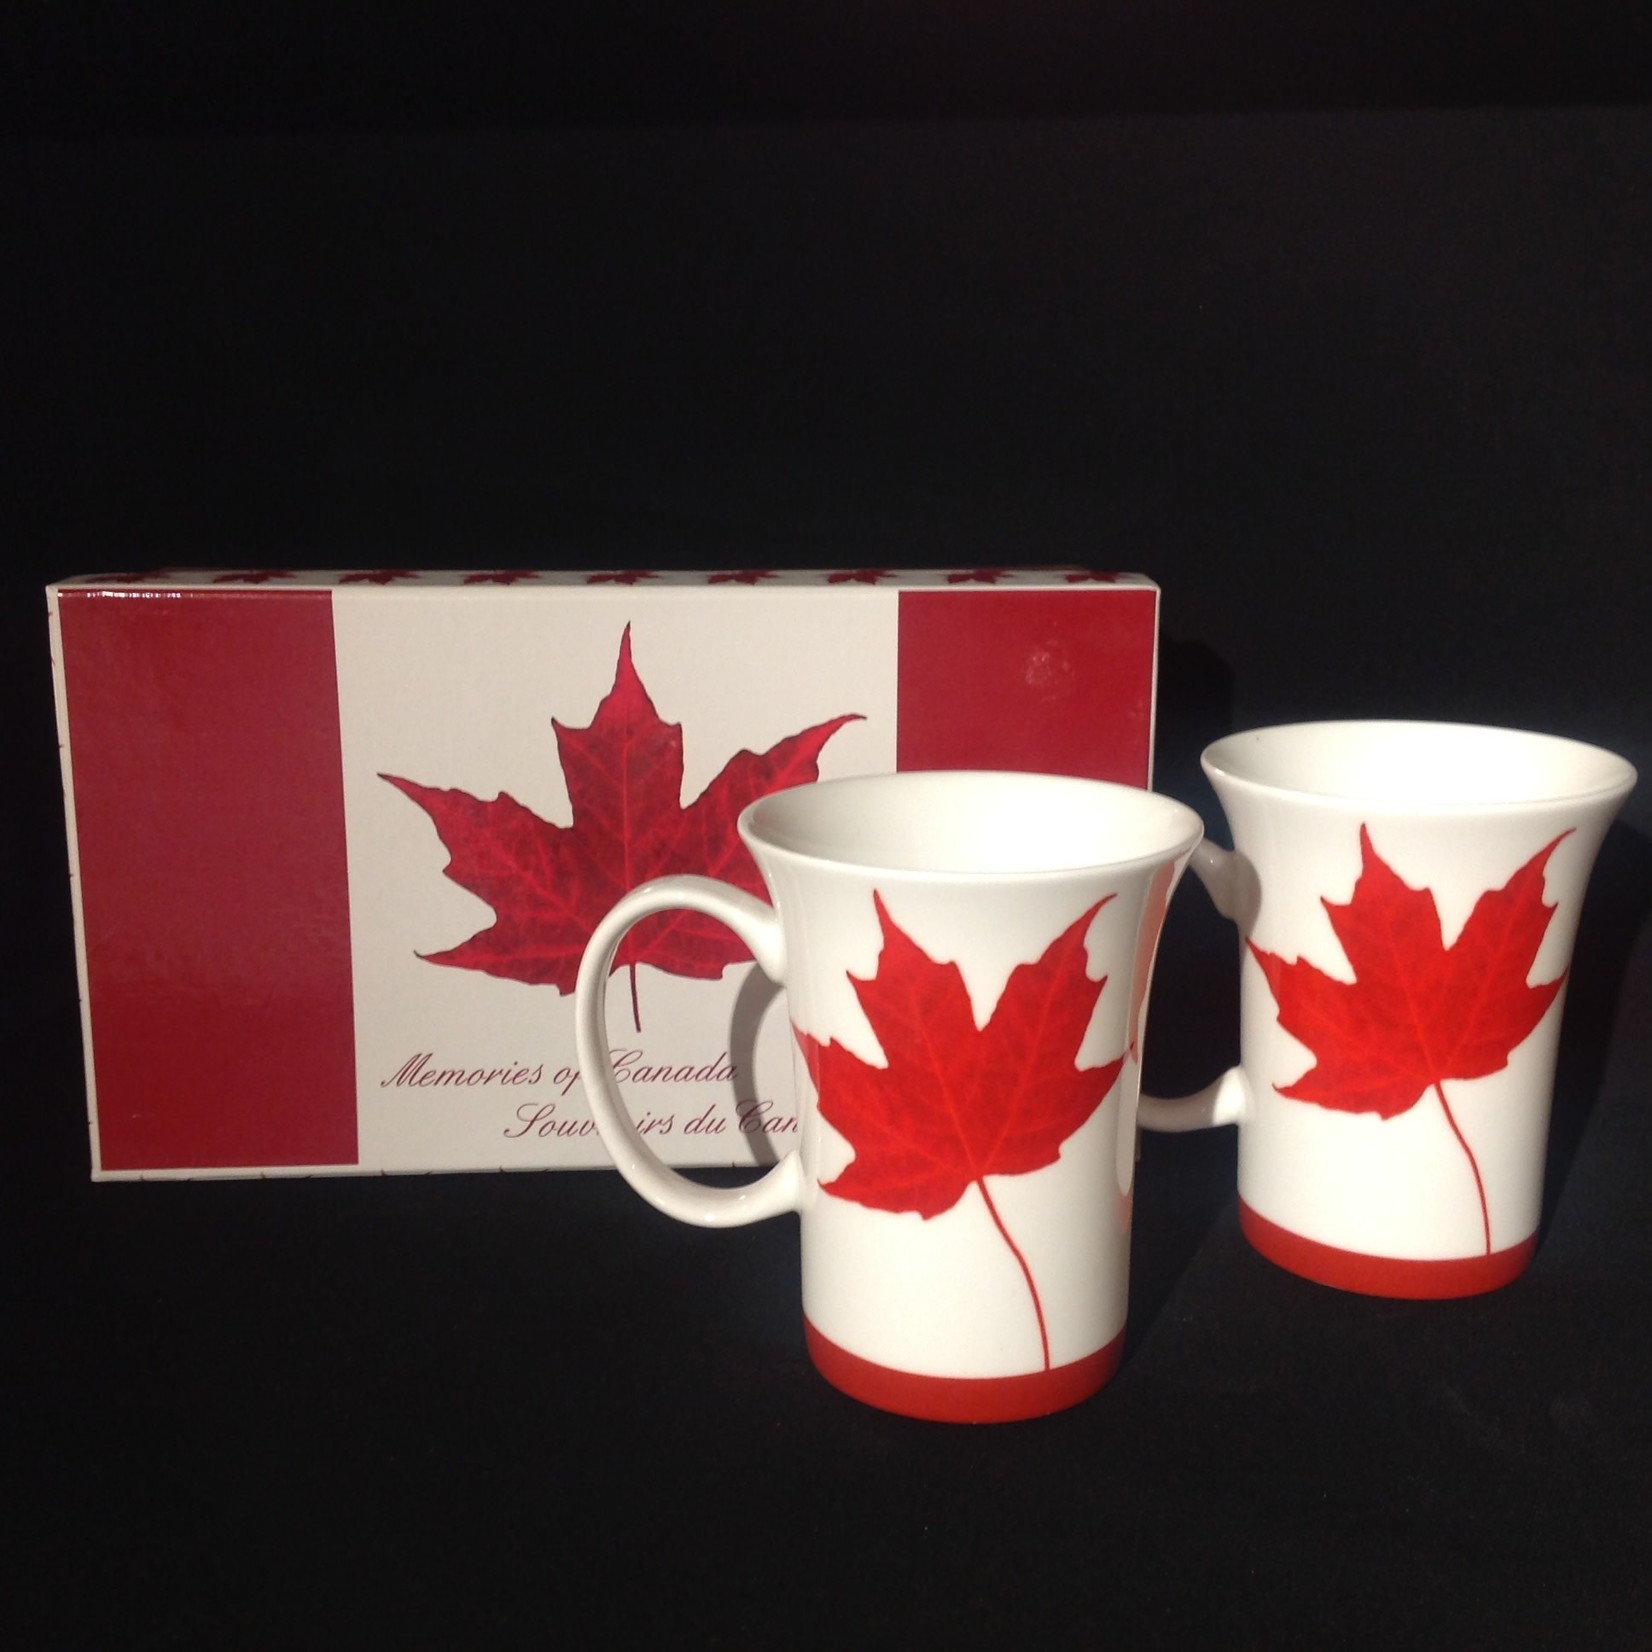 Memories of Canada (Set of 2)